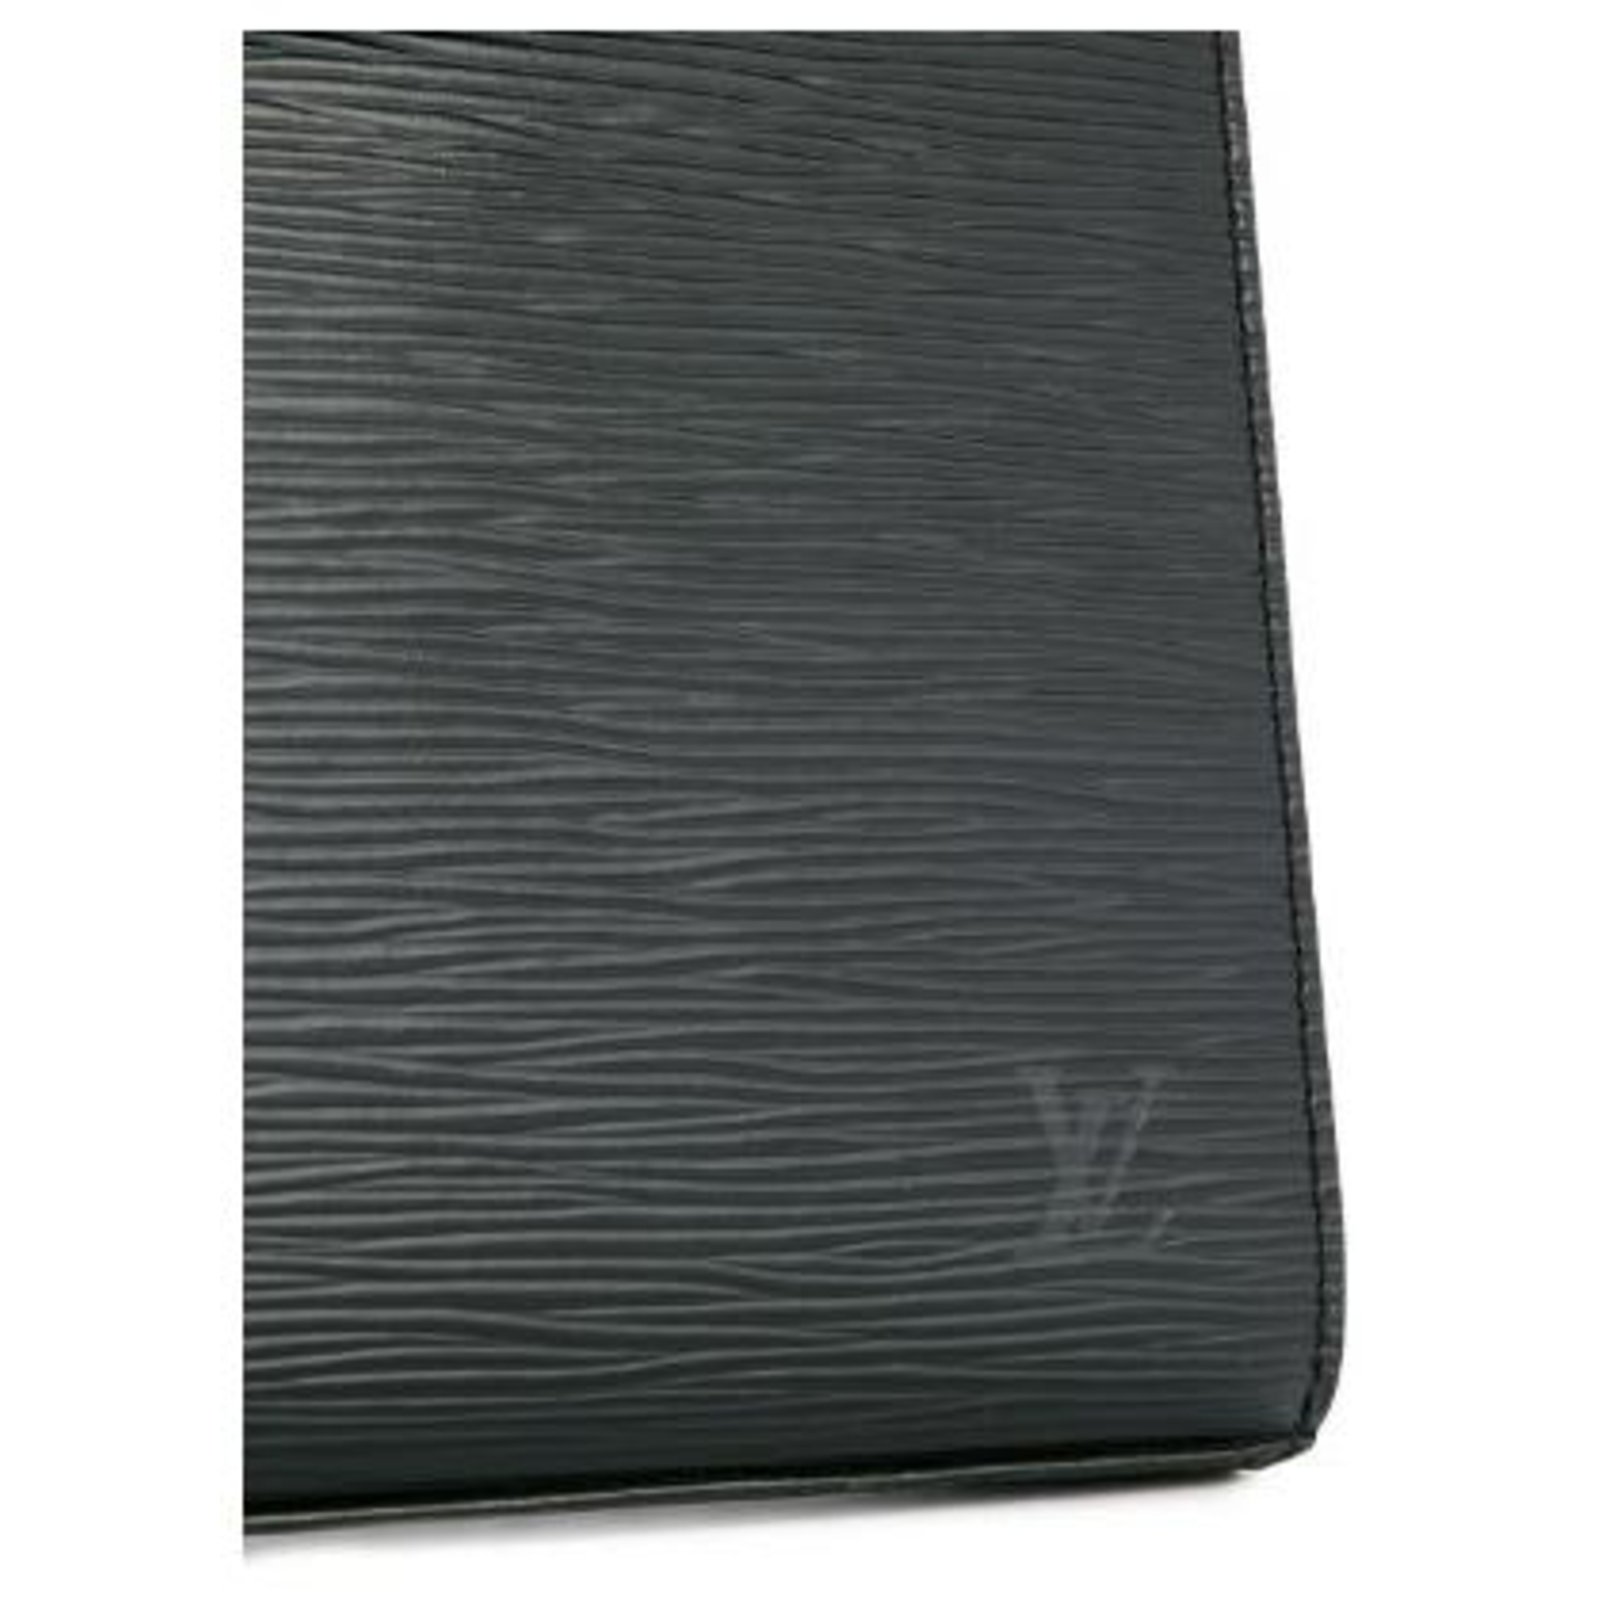 Louis Vuitton Malesherbes Bag Black Epi Leather Top Handle Handbag